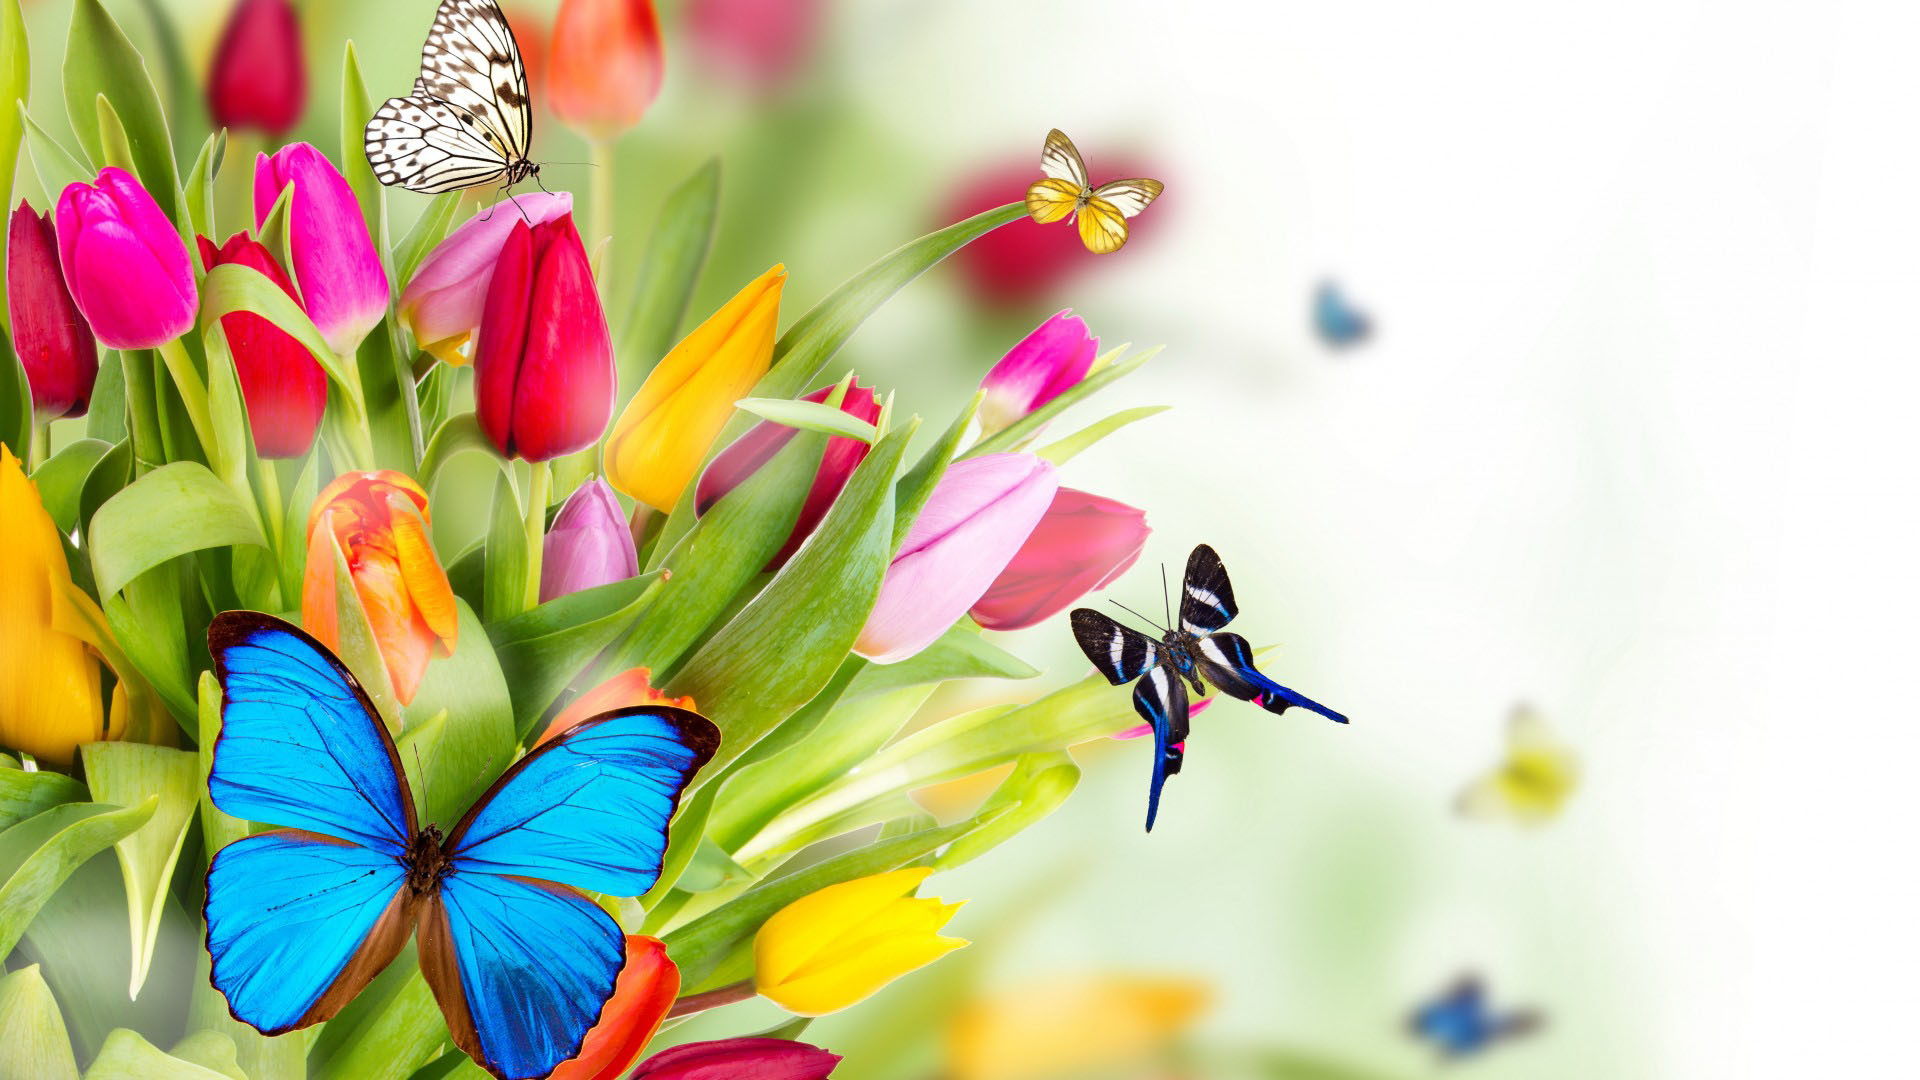 Beautiful Butterflies And Flowers Wallpaper Image